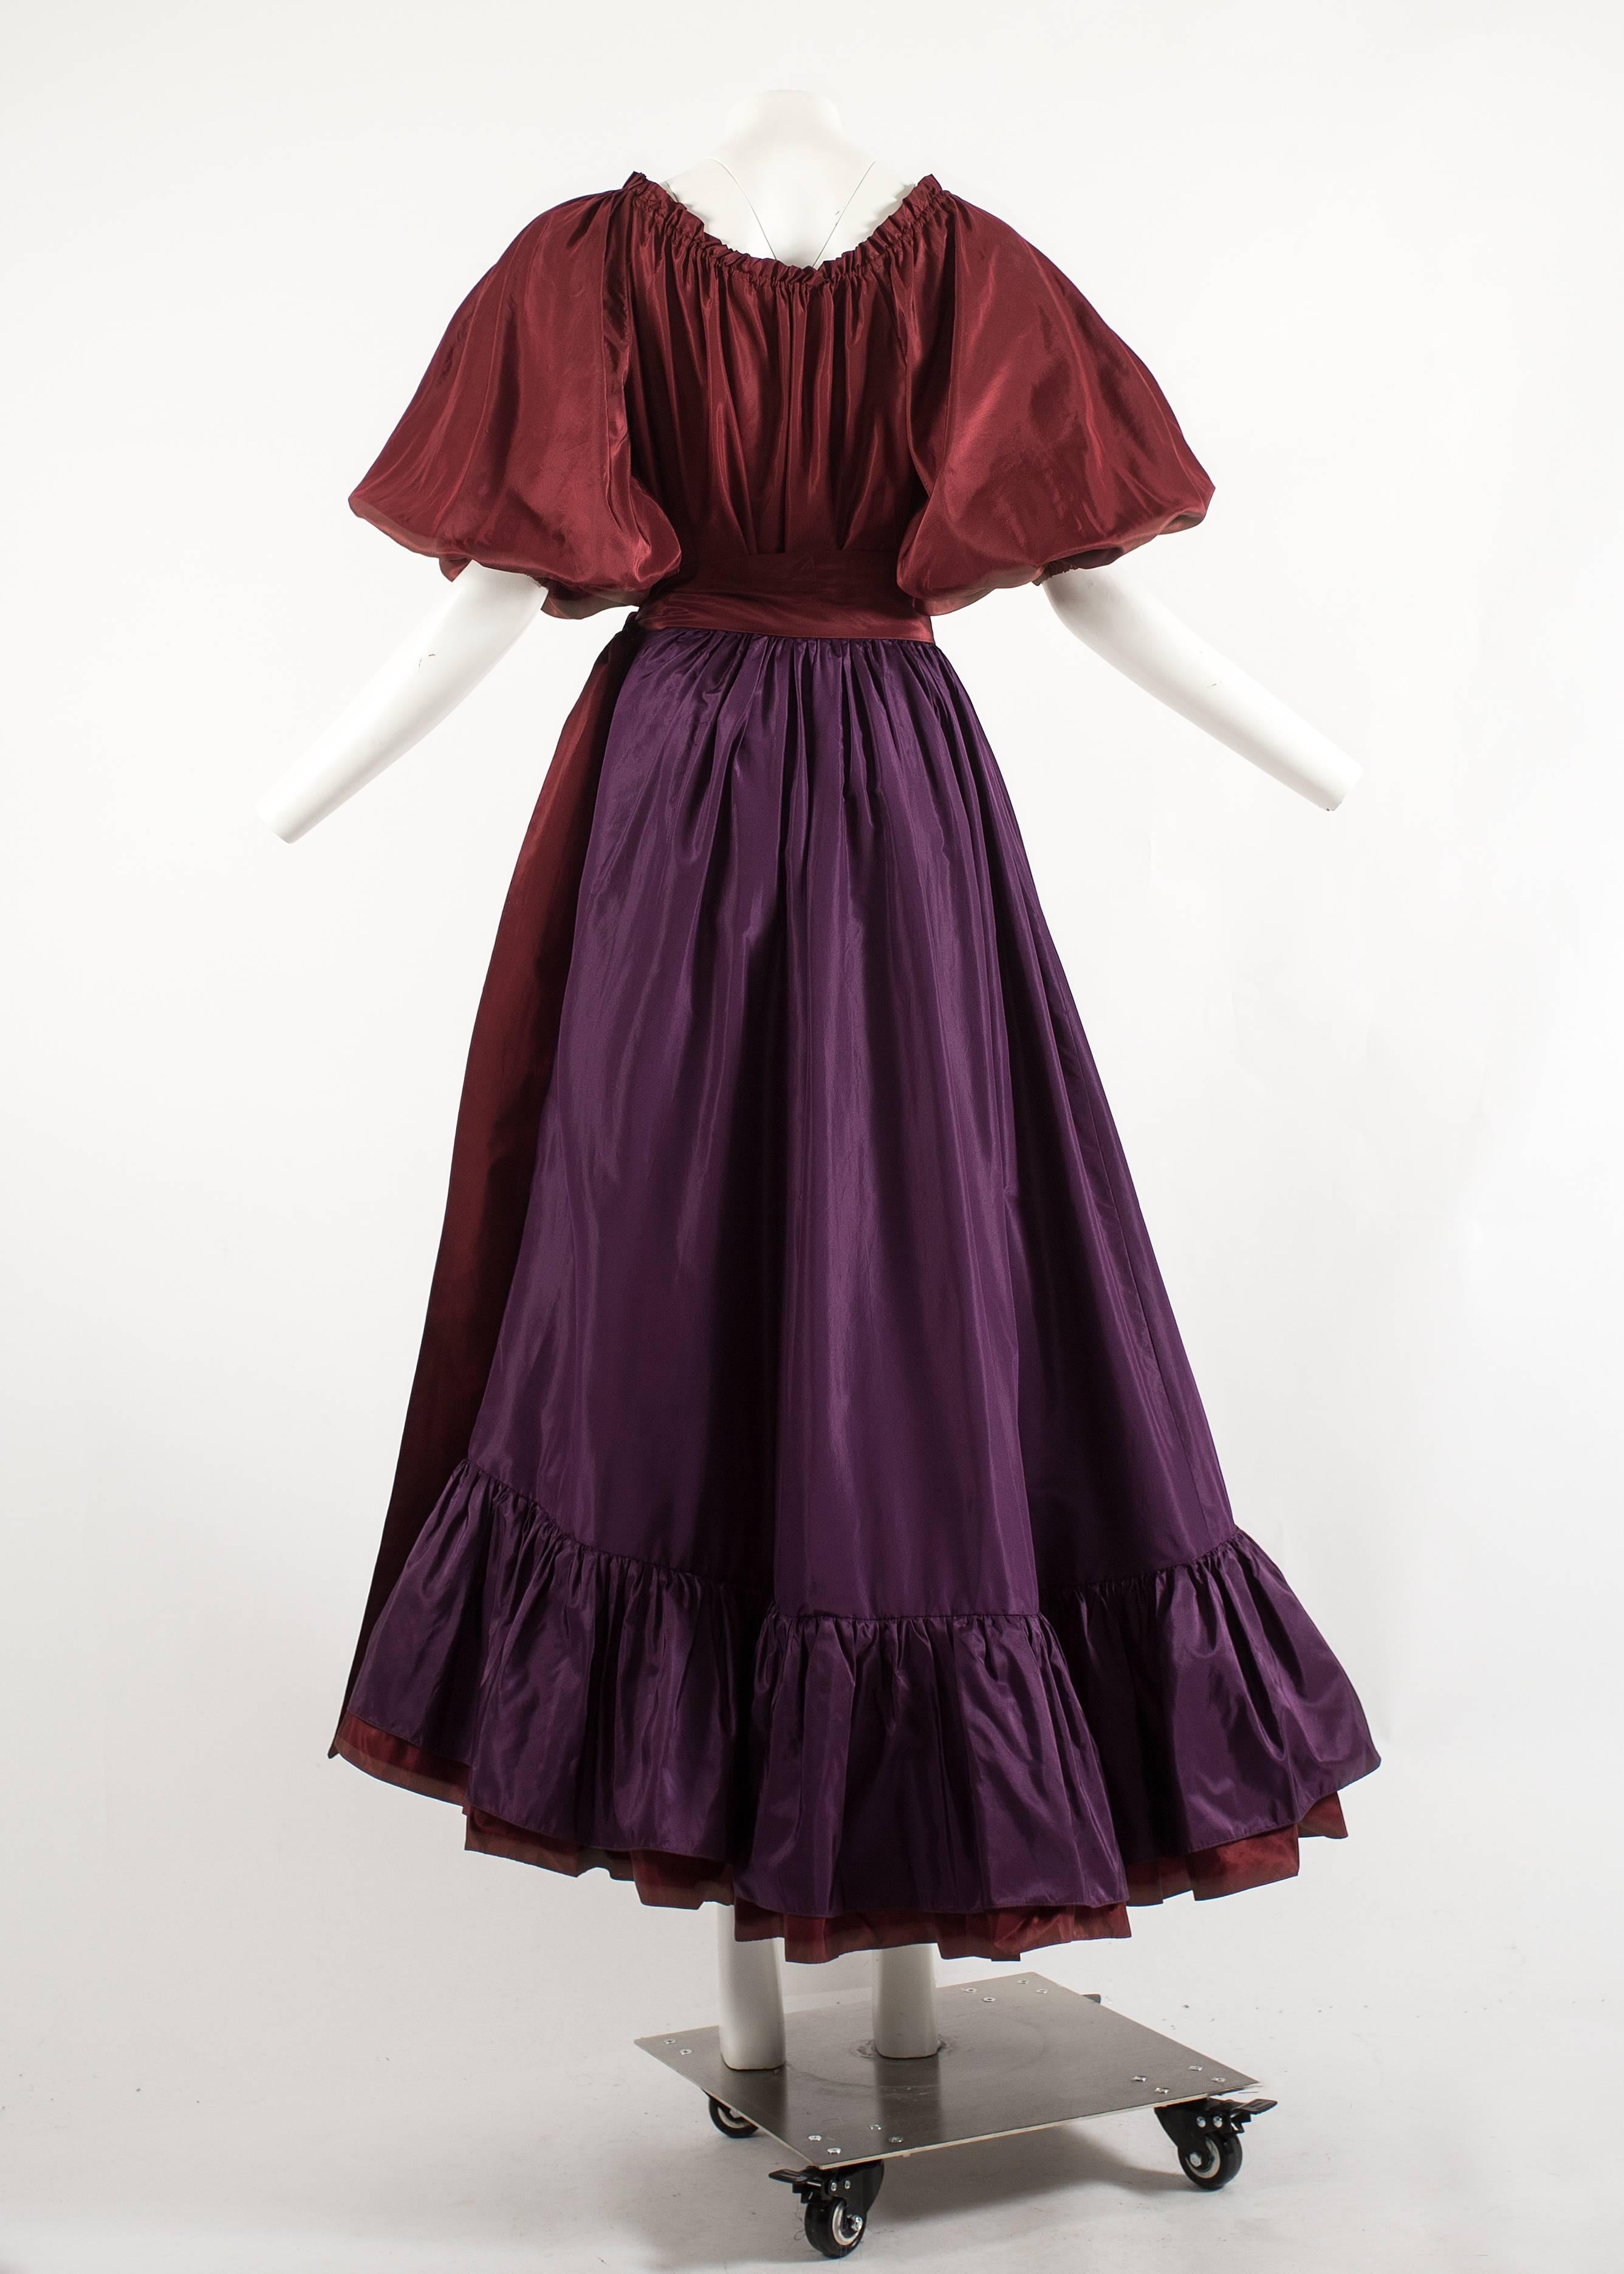 Yves Saint Laurent 1978 silk taffeta blouse and skirt ensemble  1